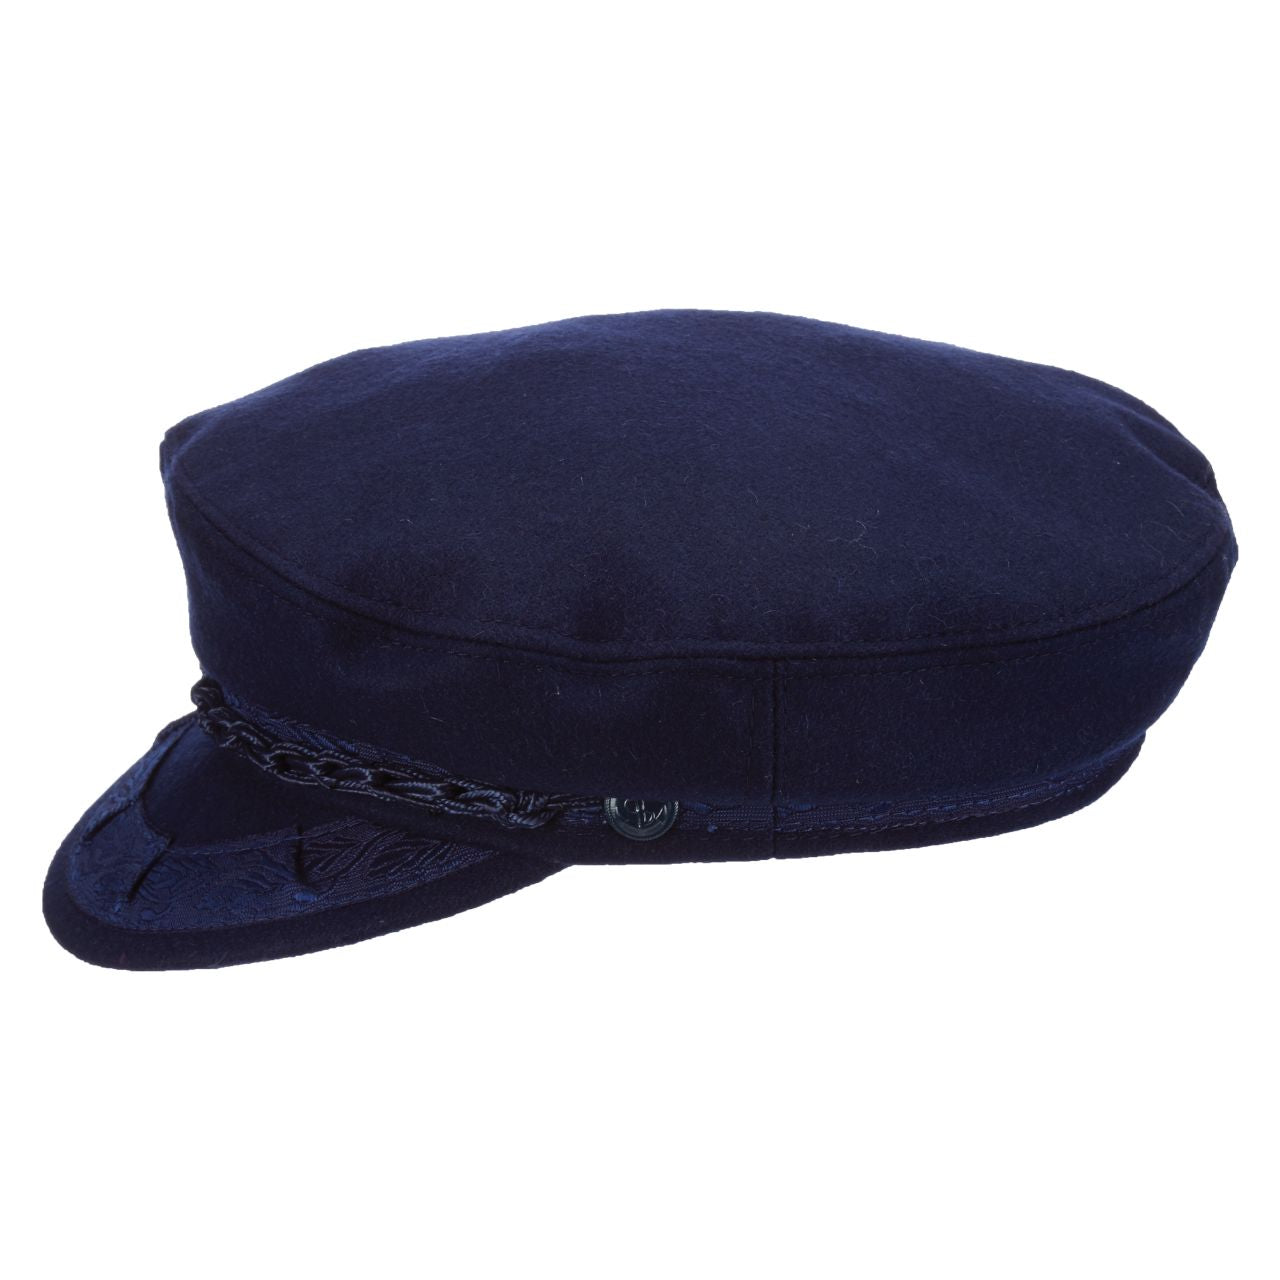 Greek Fisherman's Cap Wool Blend - Blue - Hats & Caps